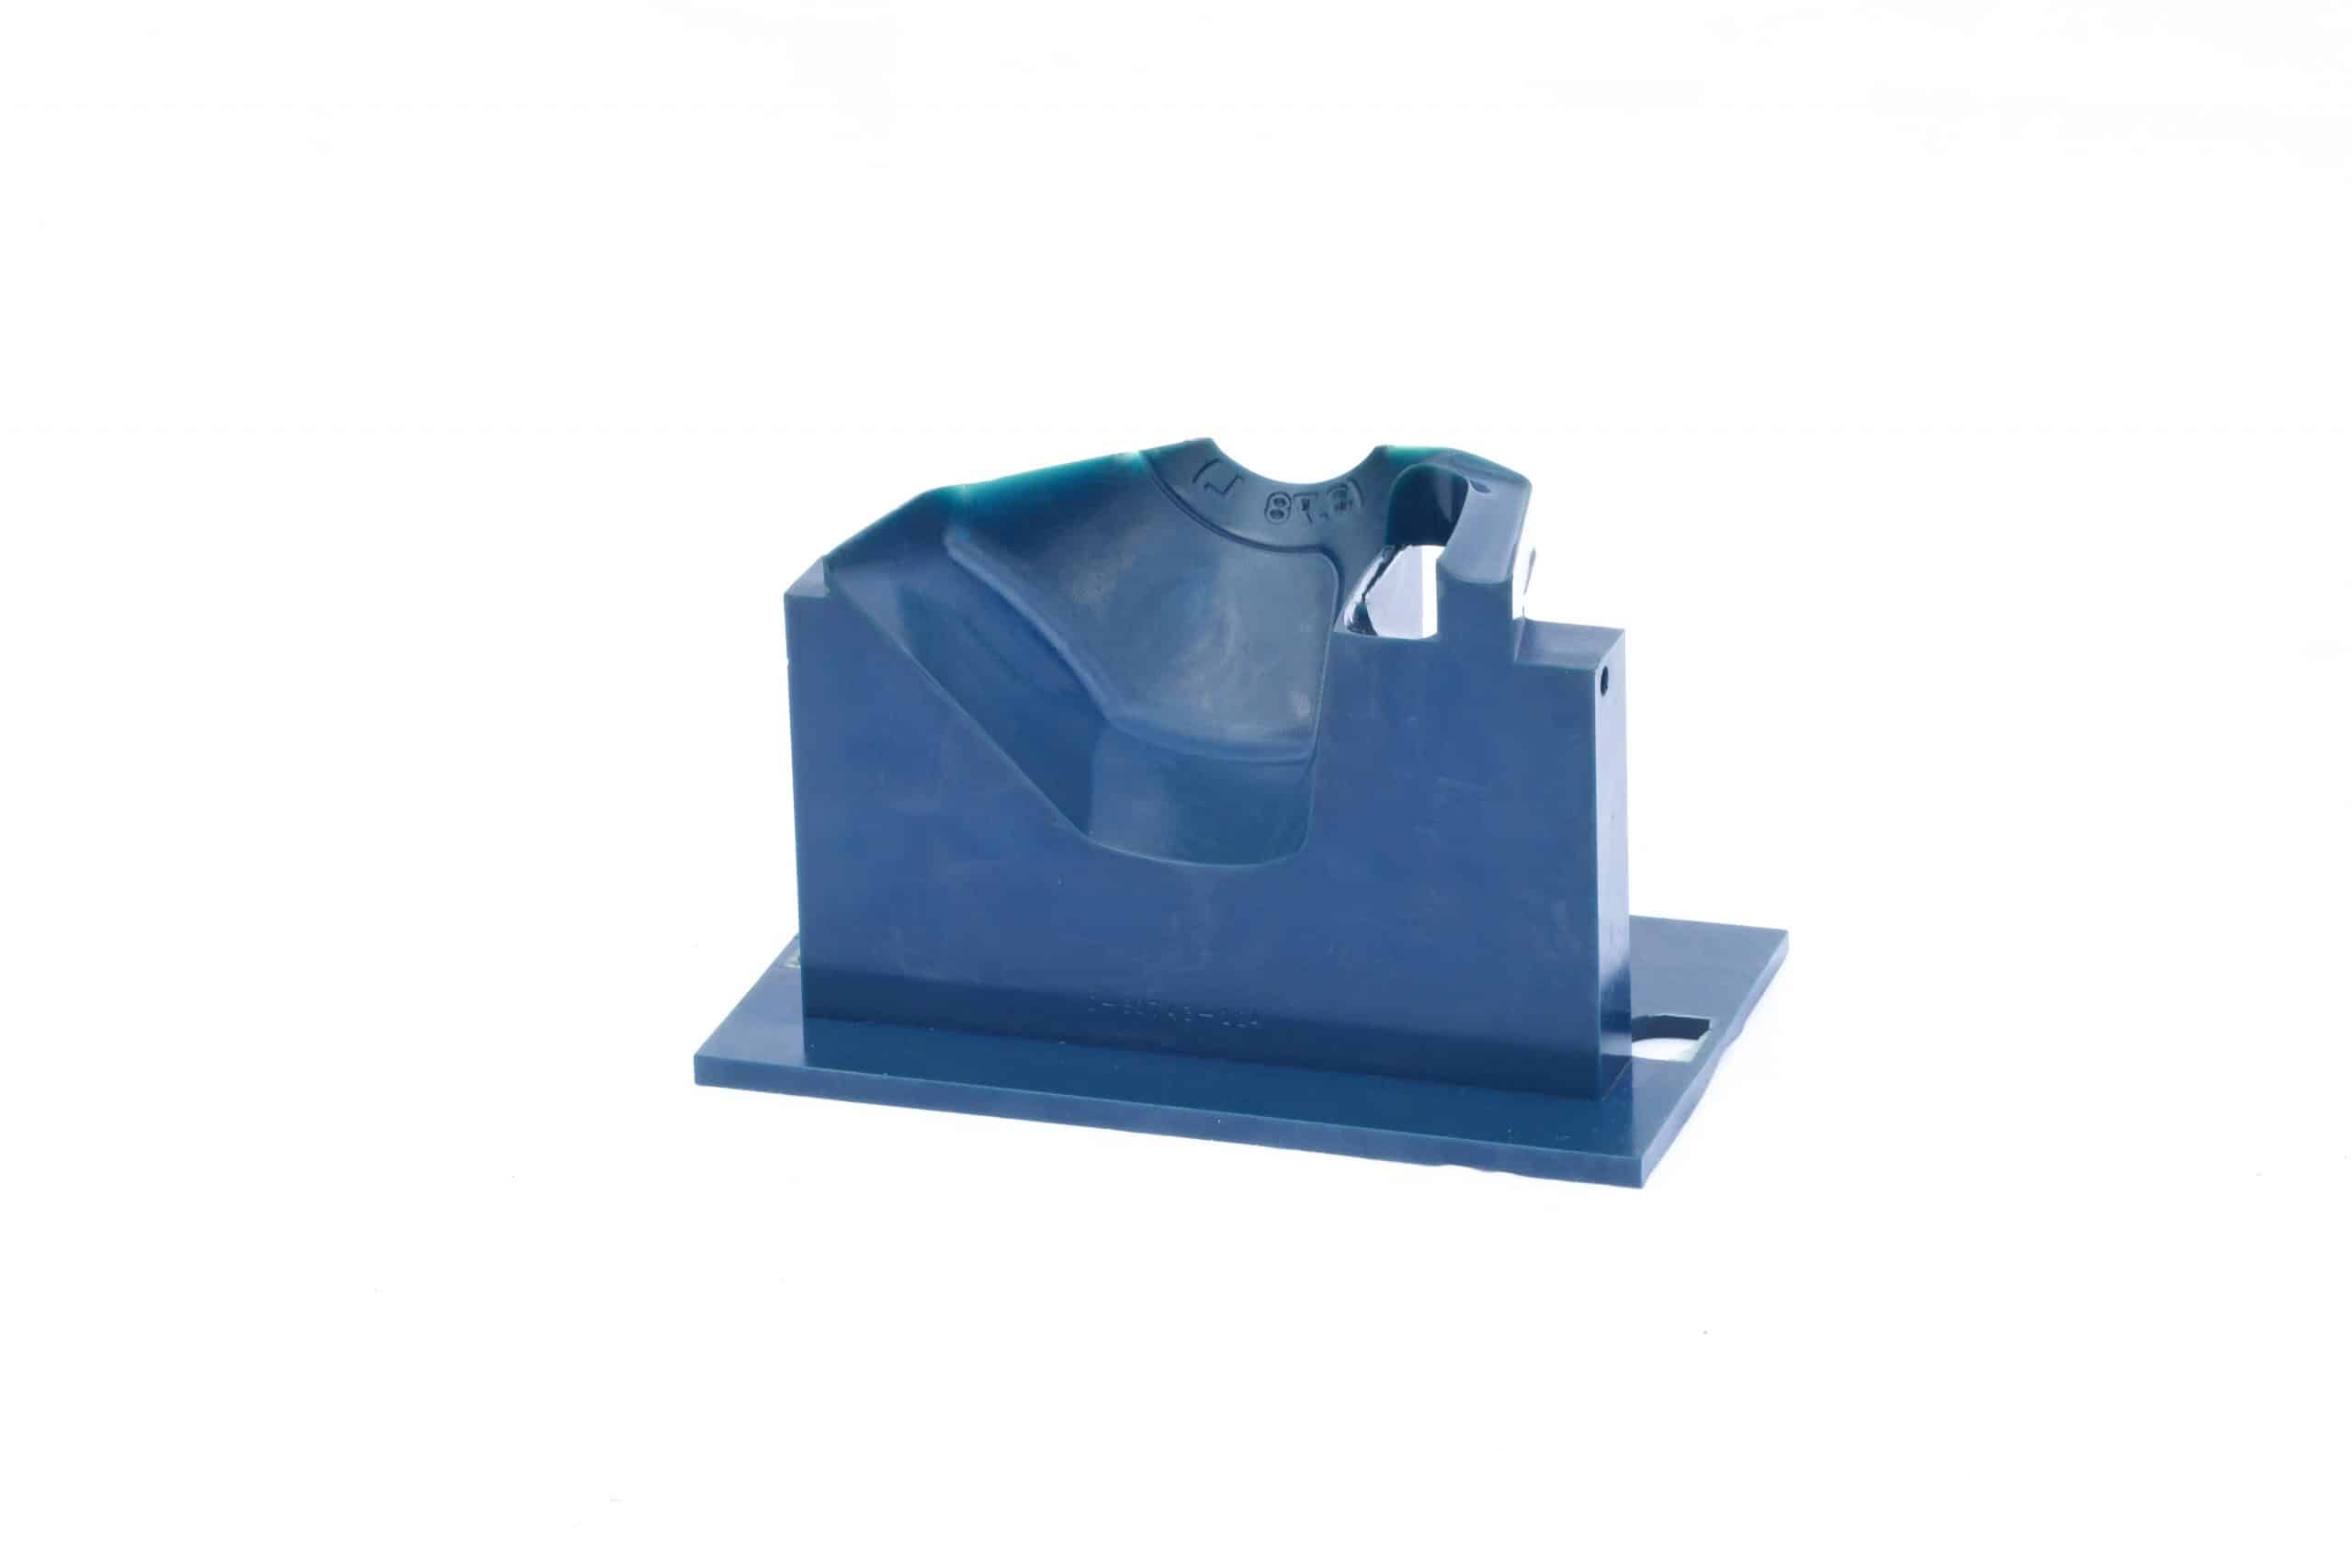 Blue polyurethane body block made from cold cast urethane.